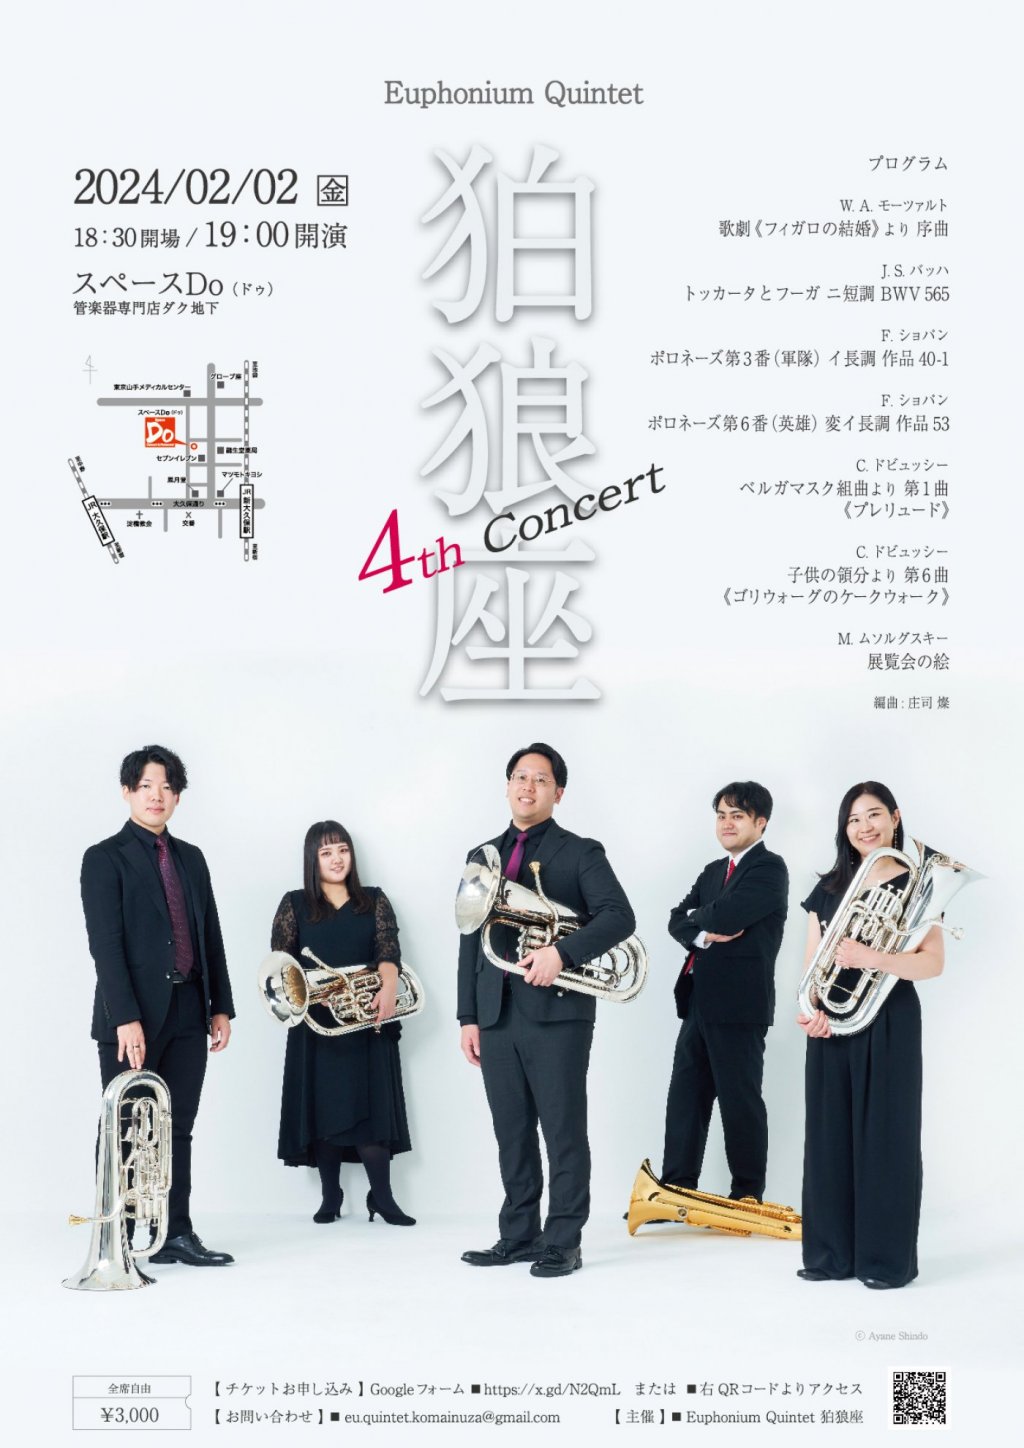 Euphonium Quintet 狛狼座 4th Concert